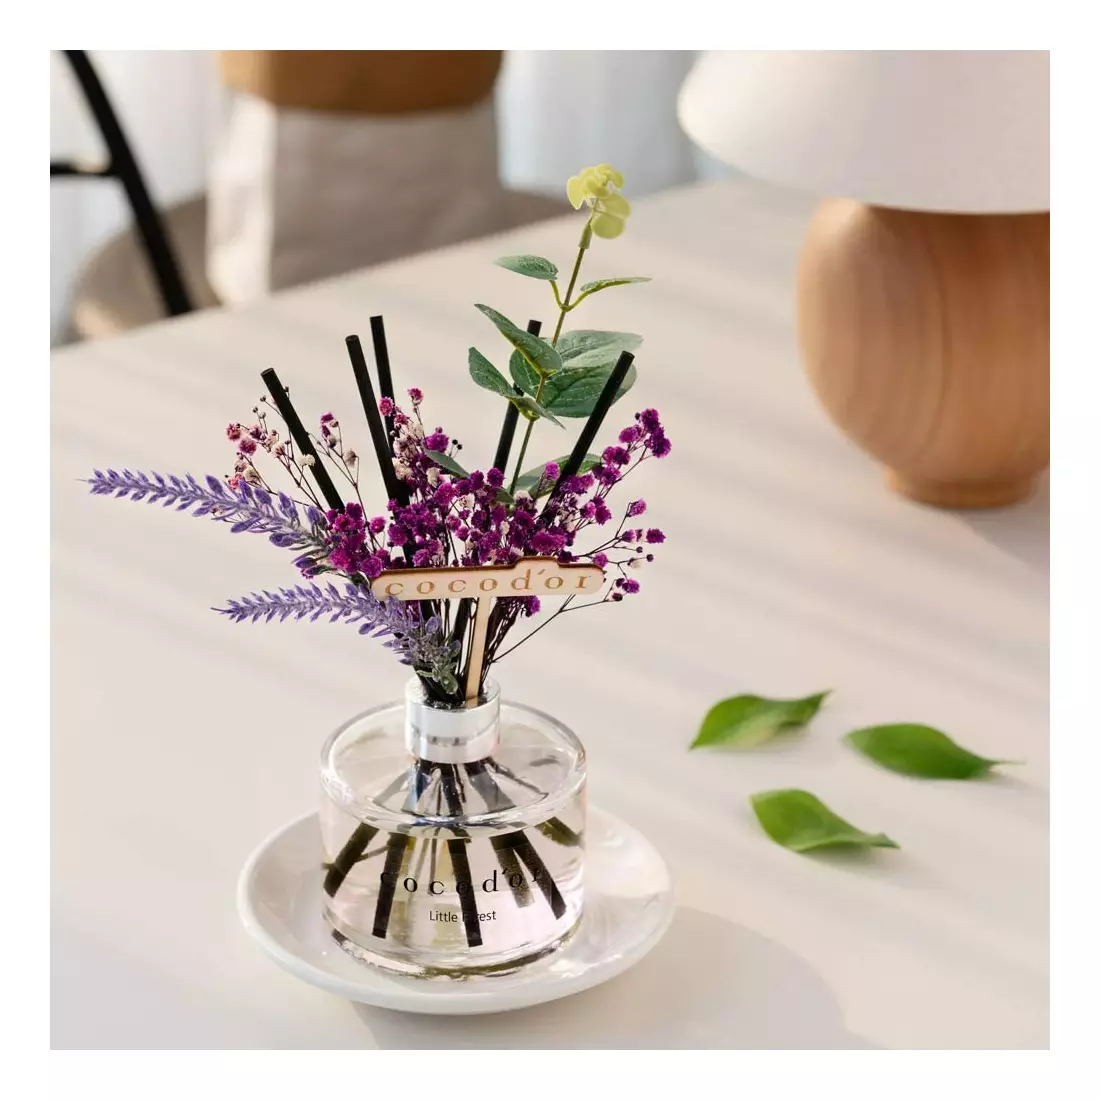 COCODOR aróma difuzér s tyčinkami a kvetmi flower lavender, pure cotton 200 ml